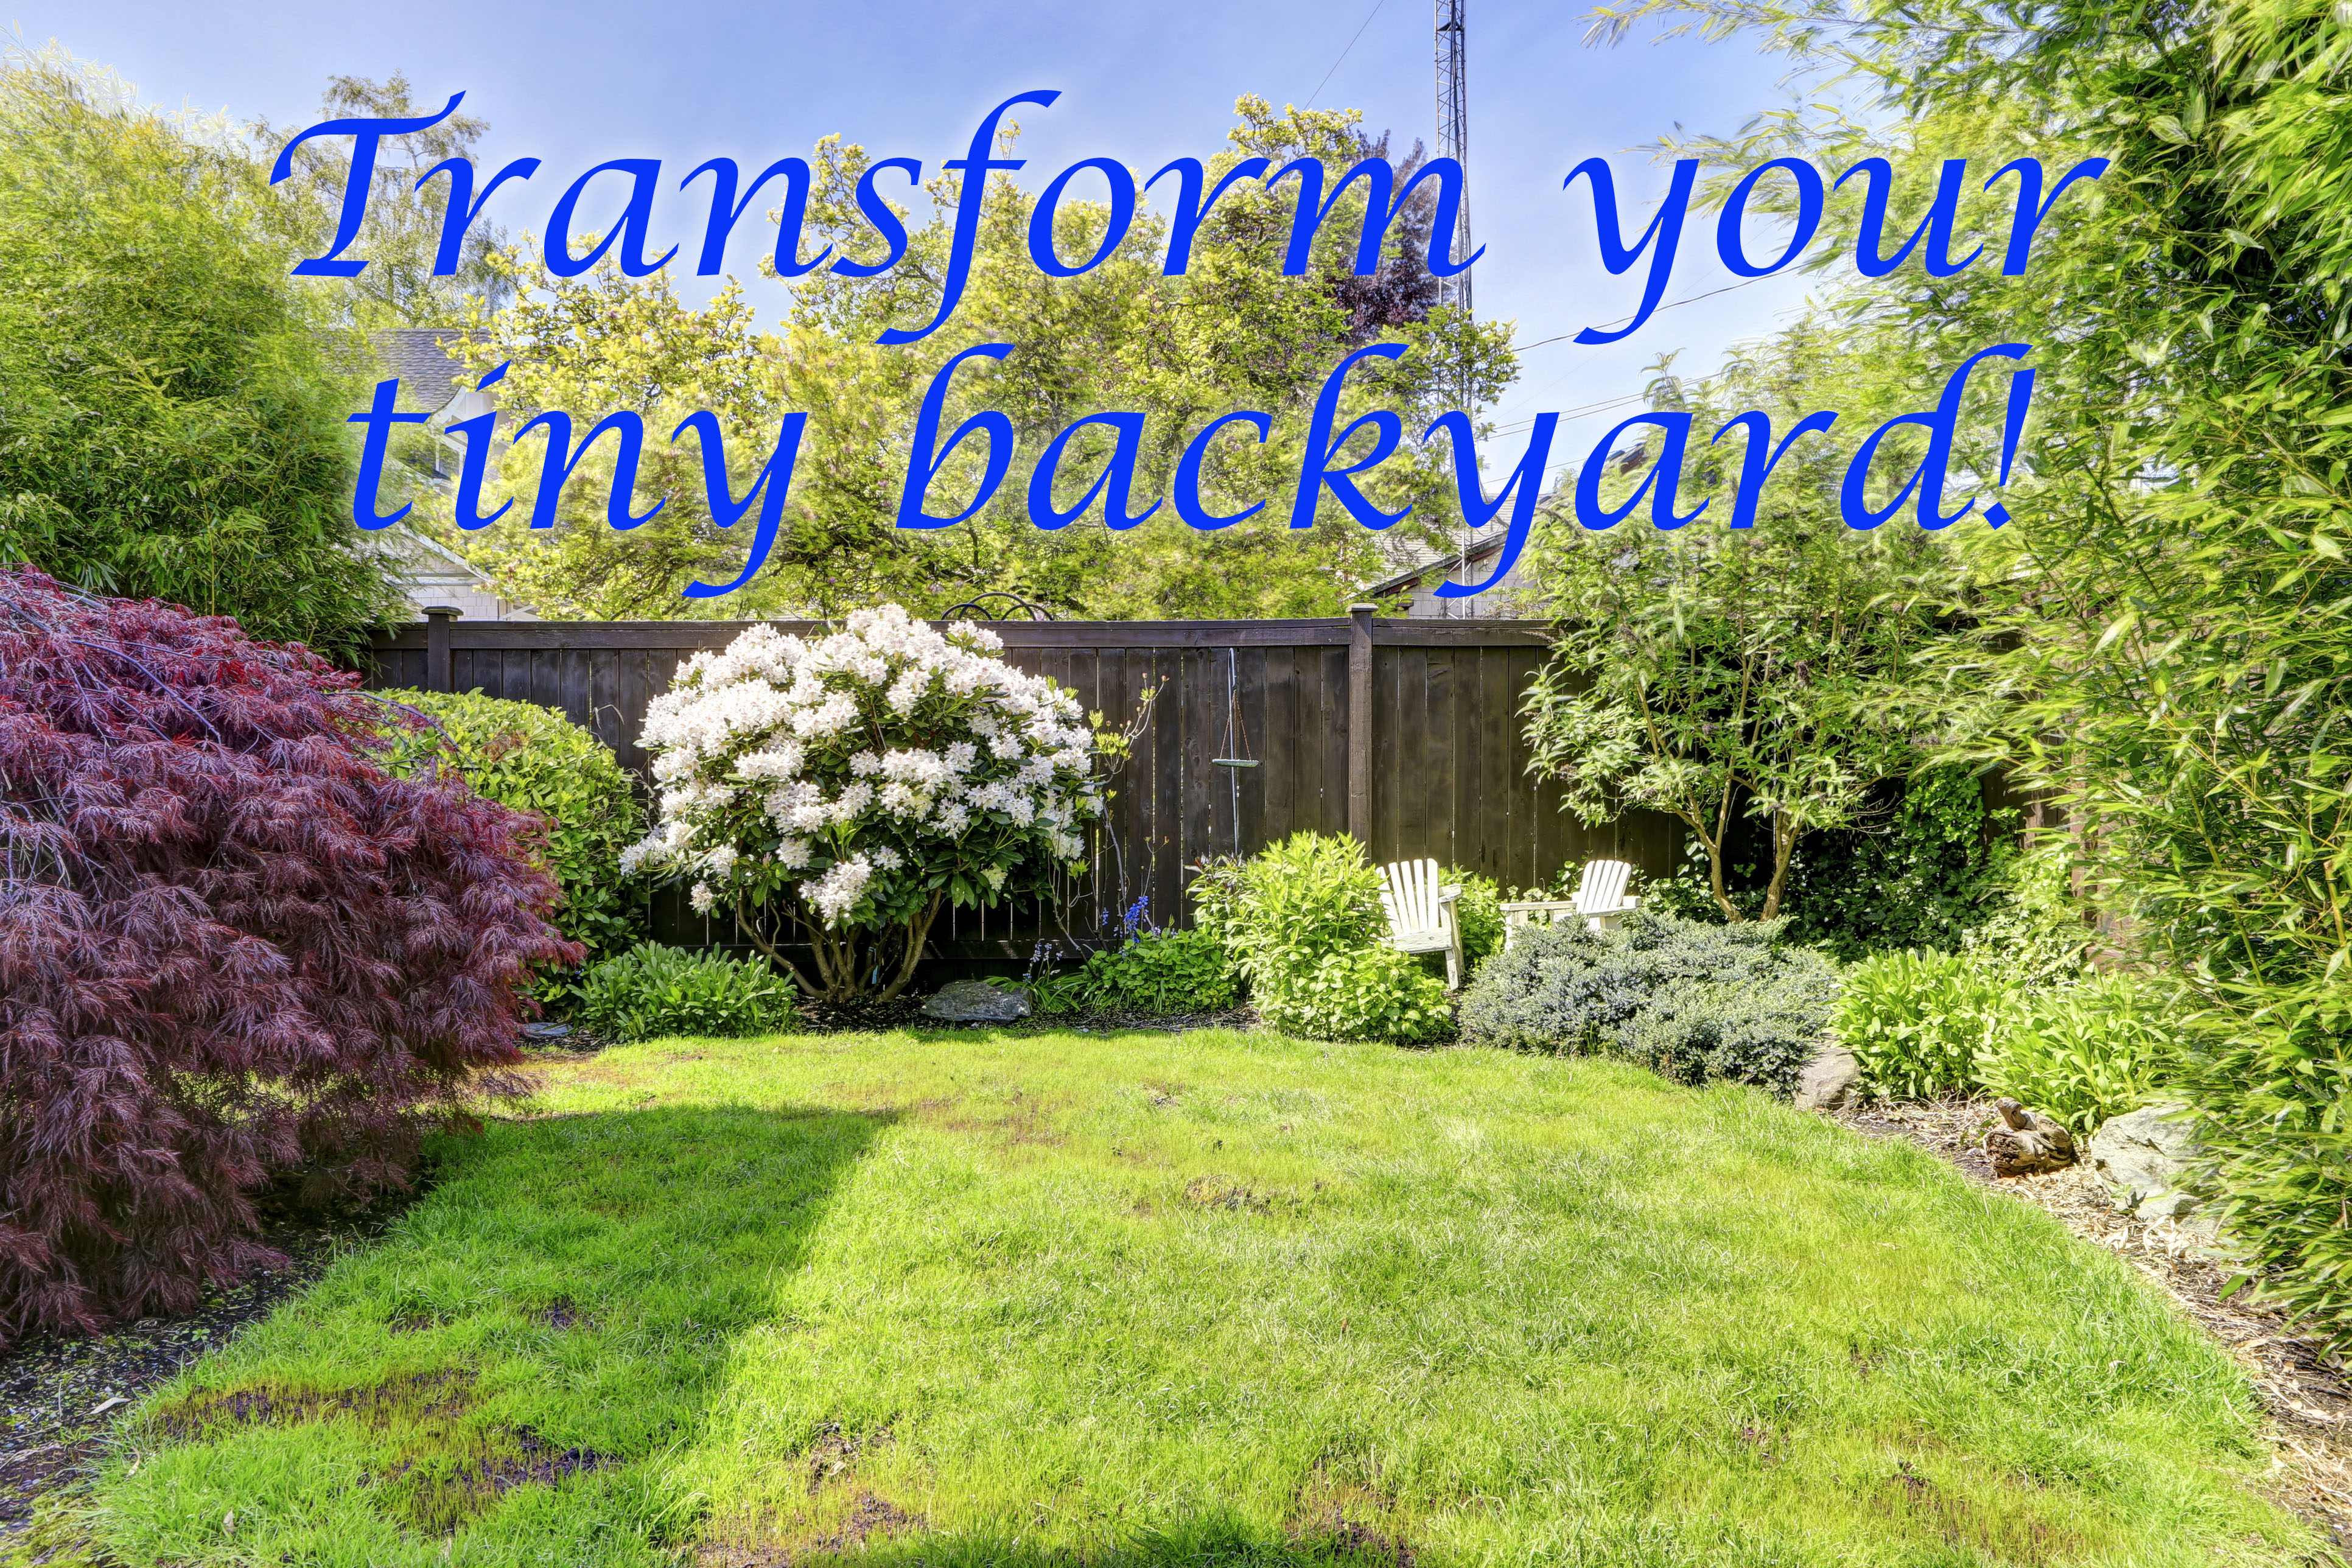 Landscaping A Small Backyard Siegmund, How Do You Landscape A Small Backyard